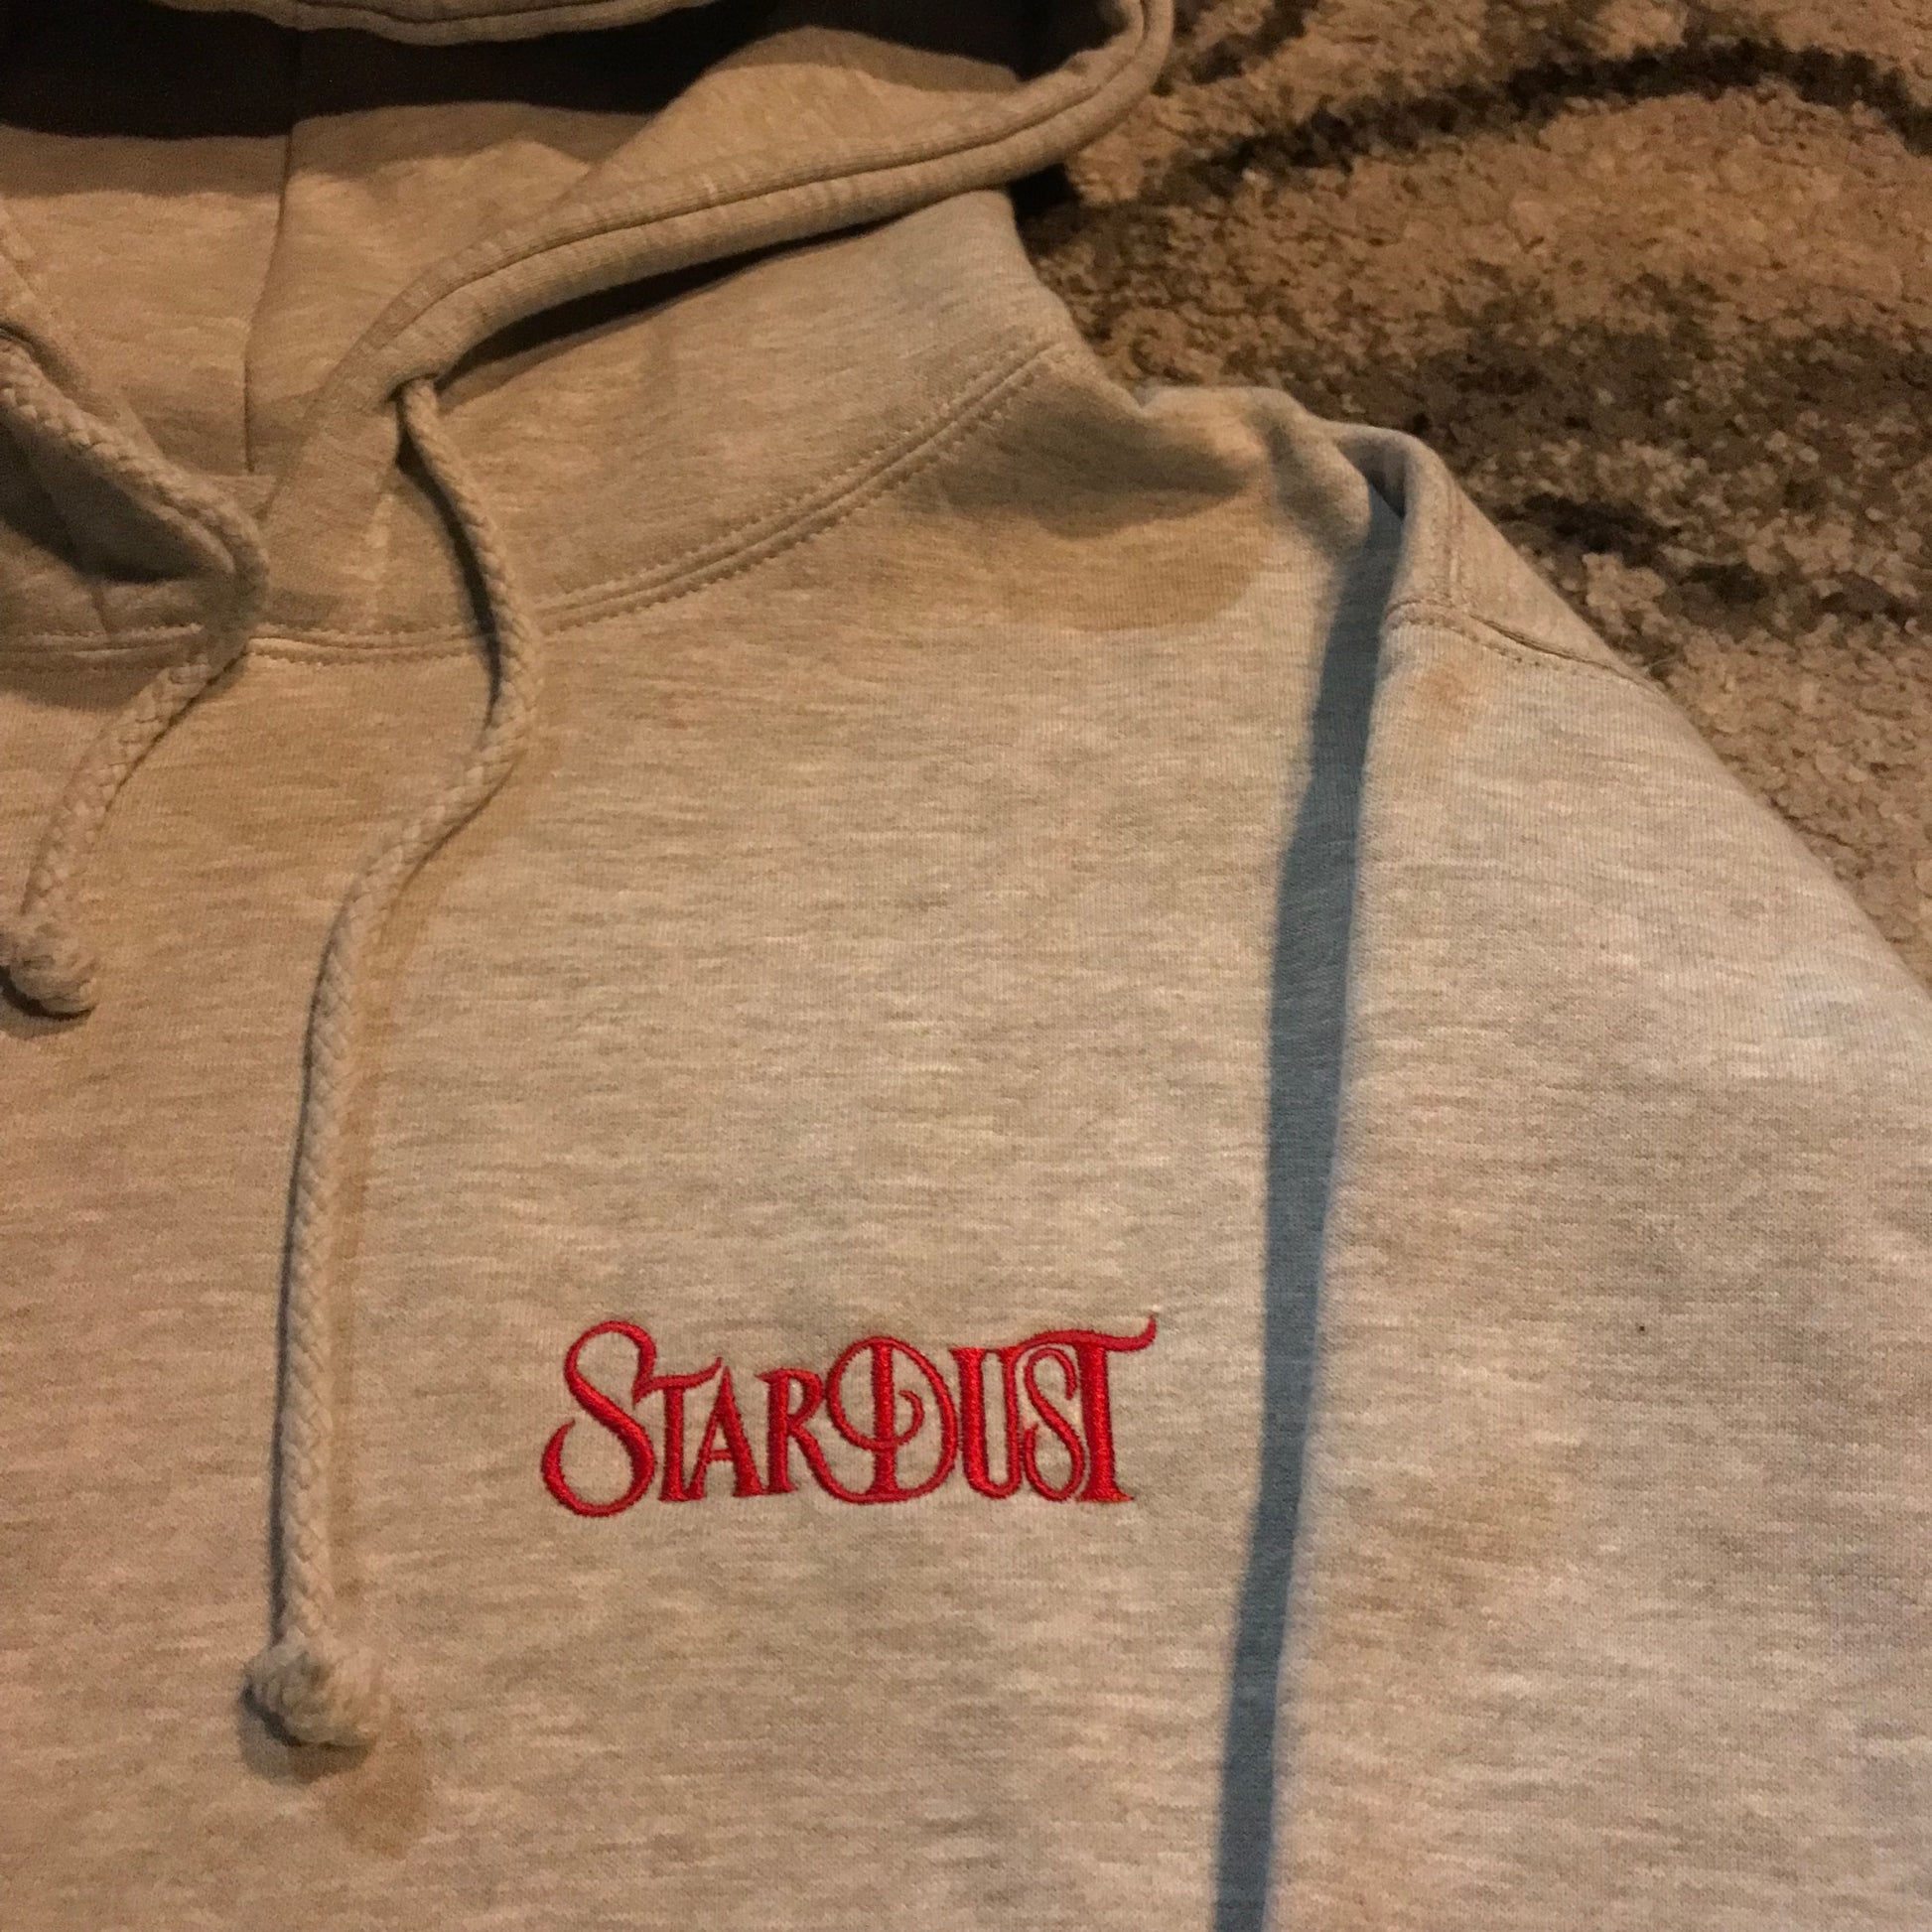 Stardust Skate Shop Wanderlust Hoody 008 Grey Heather / Red 